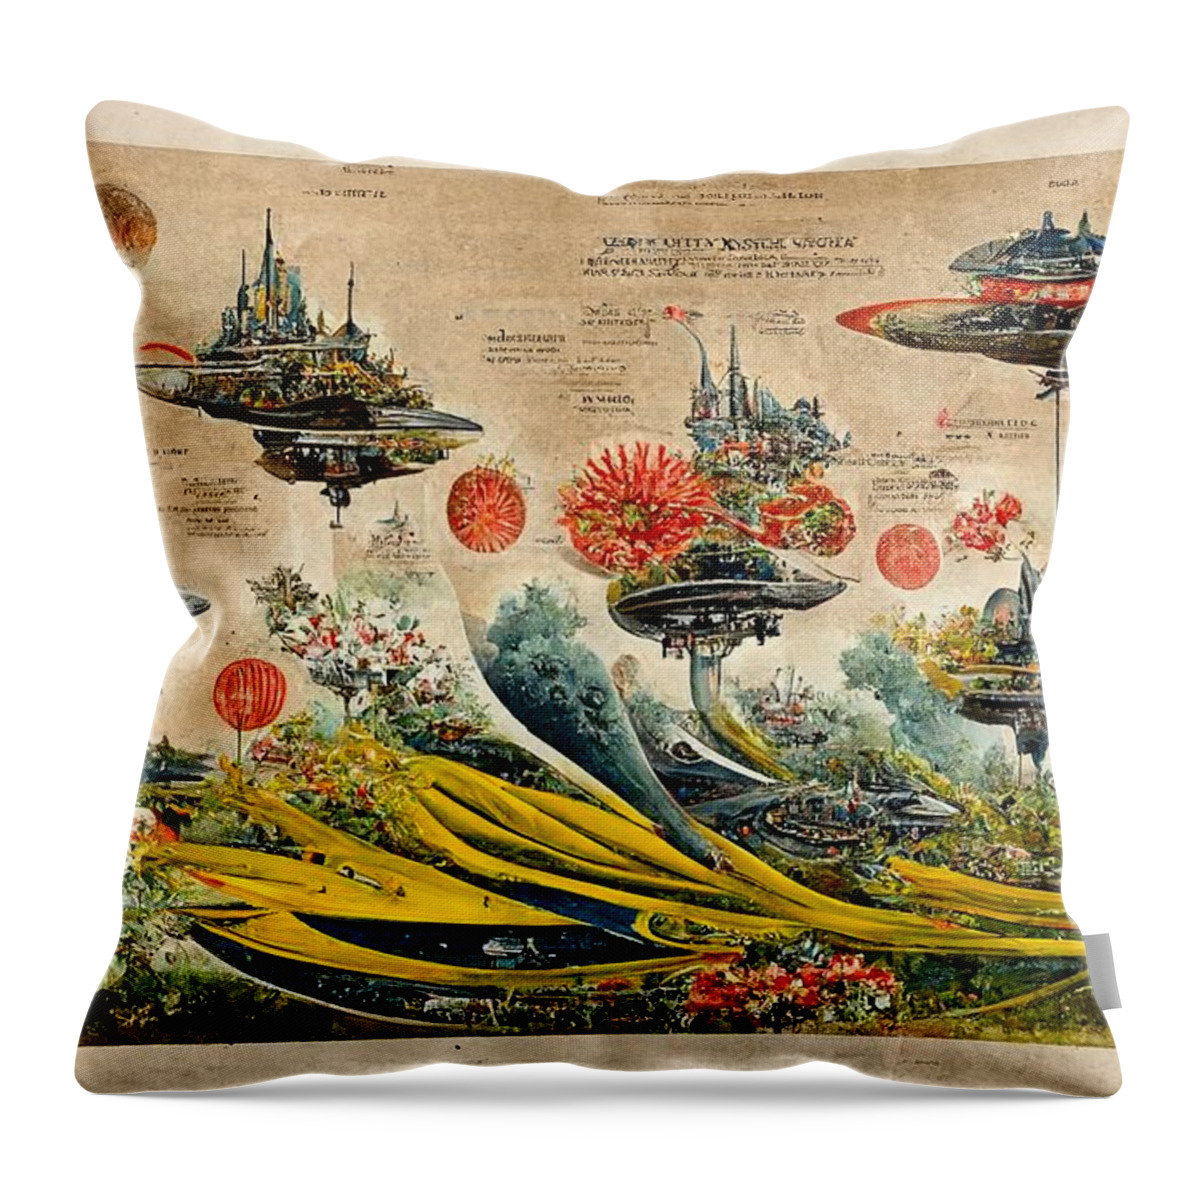 Alien Throw Pillow featuring the digital art Alien Landscape by Nickleen Mosher